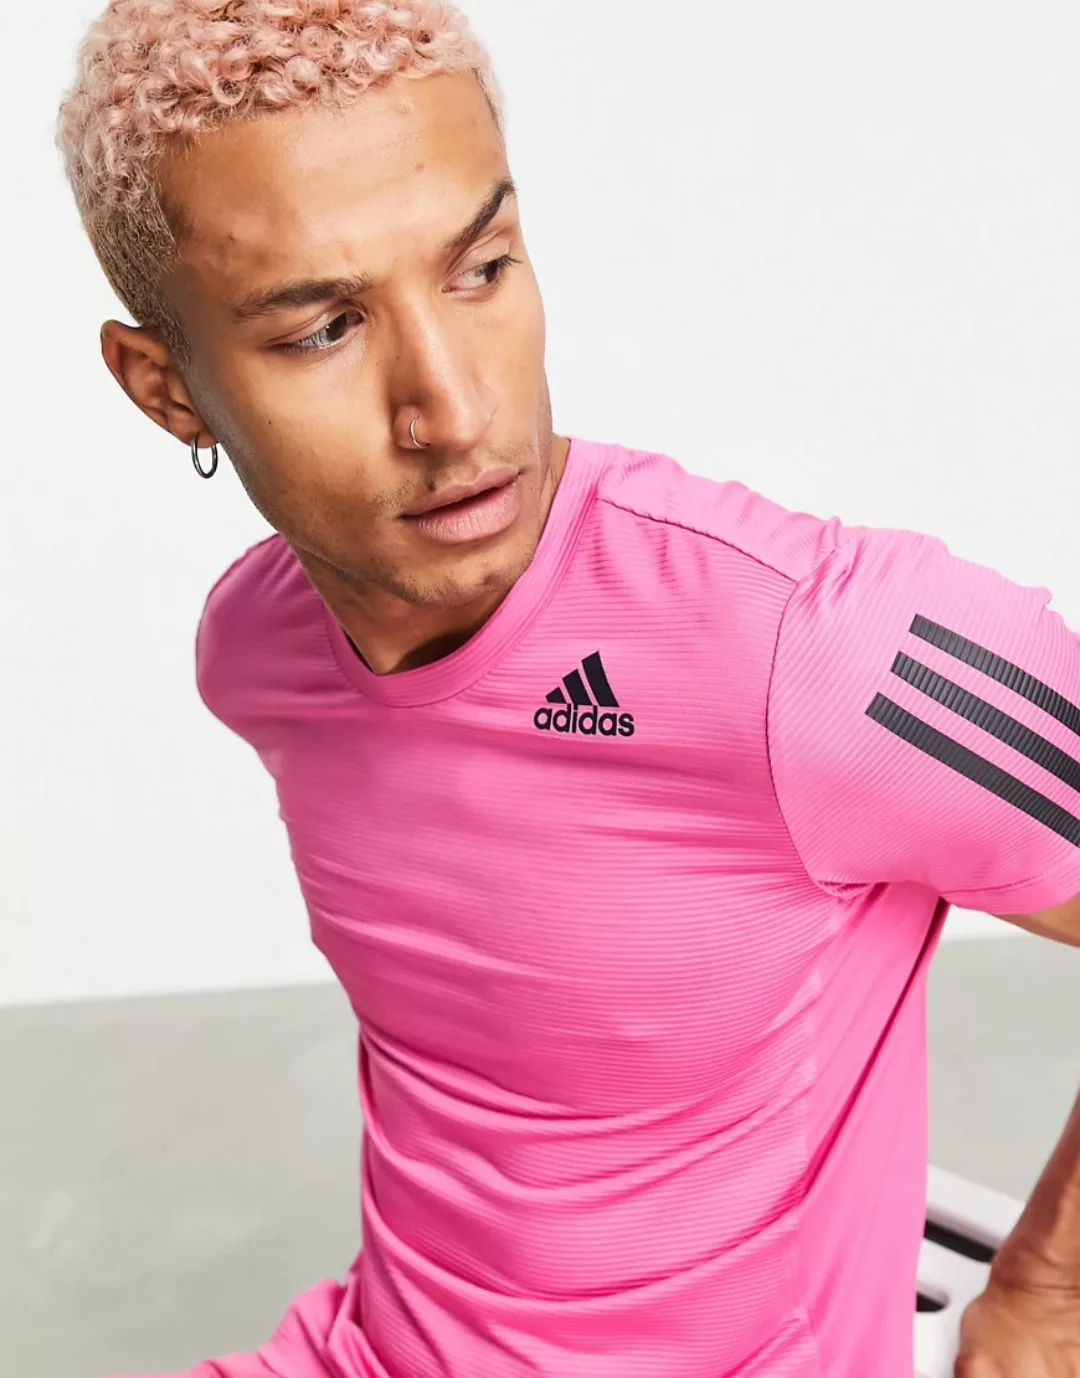 adidas Training – Aeroready – T-Shirt mit BOS-Logo in Rosa günstig online kaufen